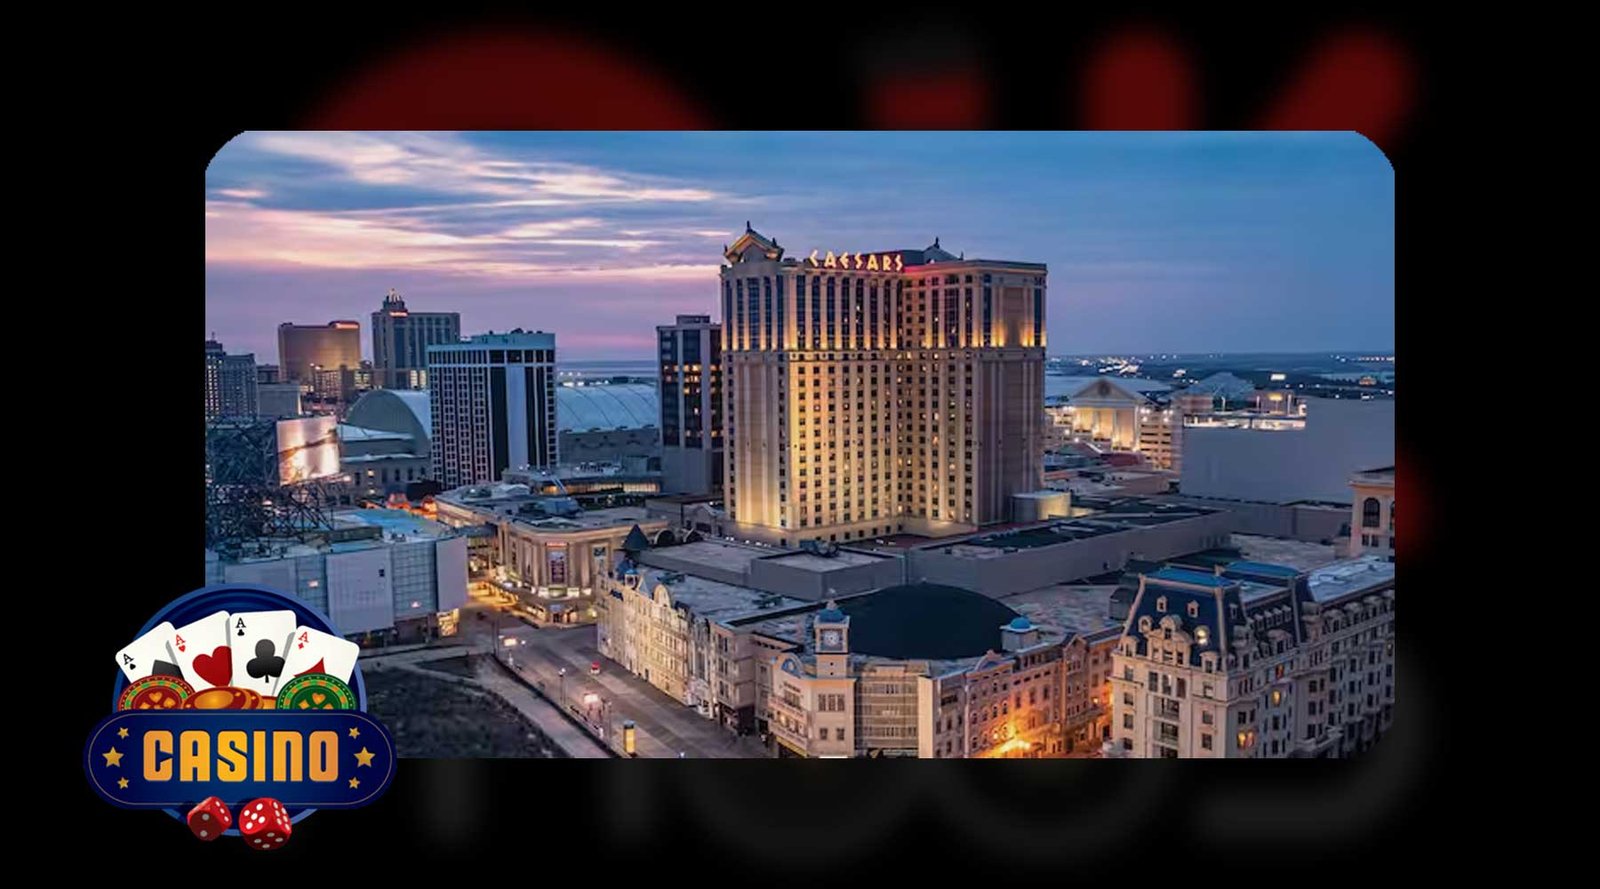 Caesars Atlantic City Casino and Resort